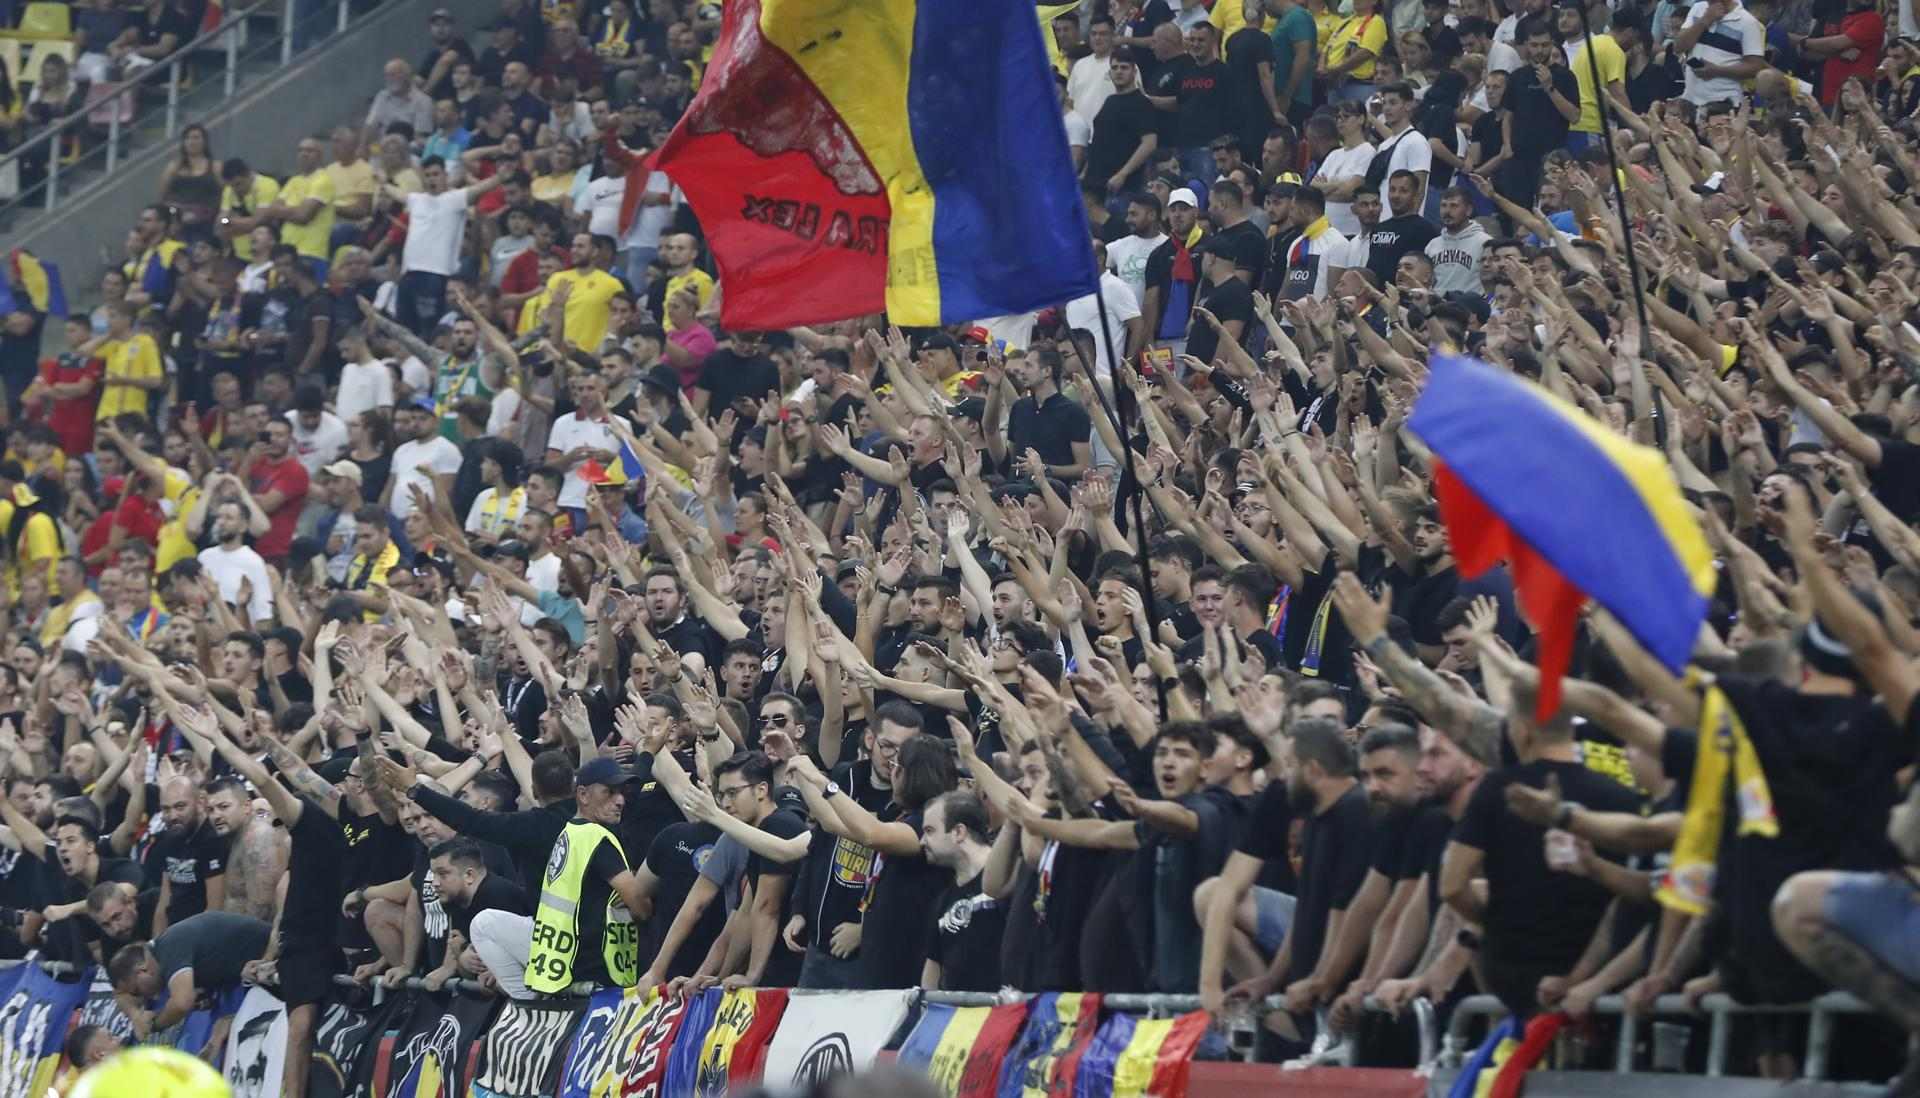 Vergonya al Romania-Kosovo, suspès una hora per una polèmica pancarta: "Kosovo és Sèrbia"